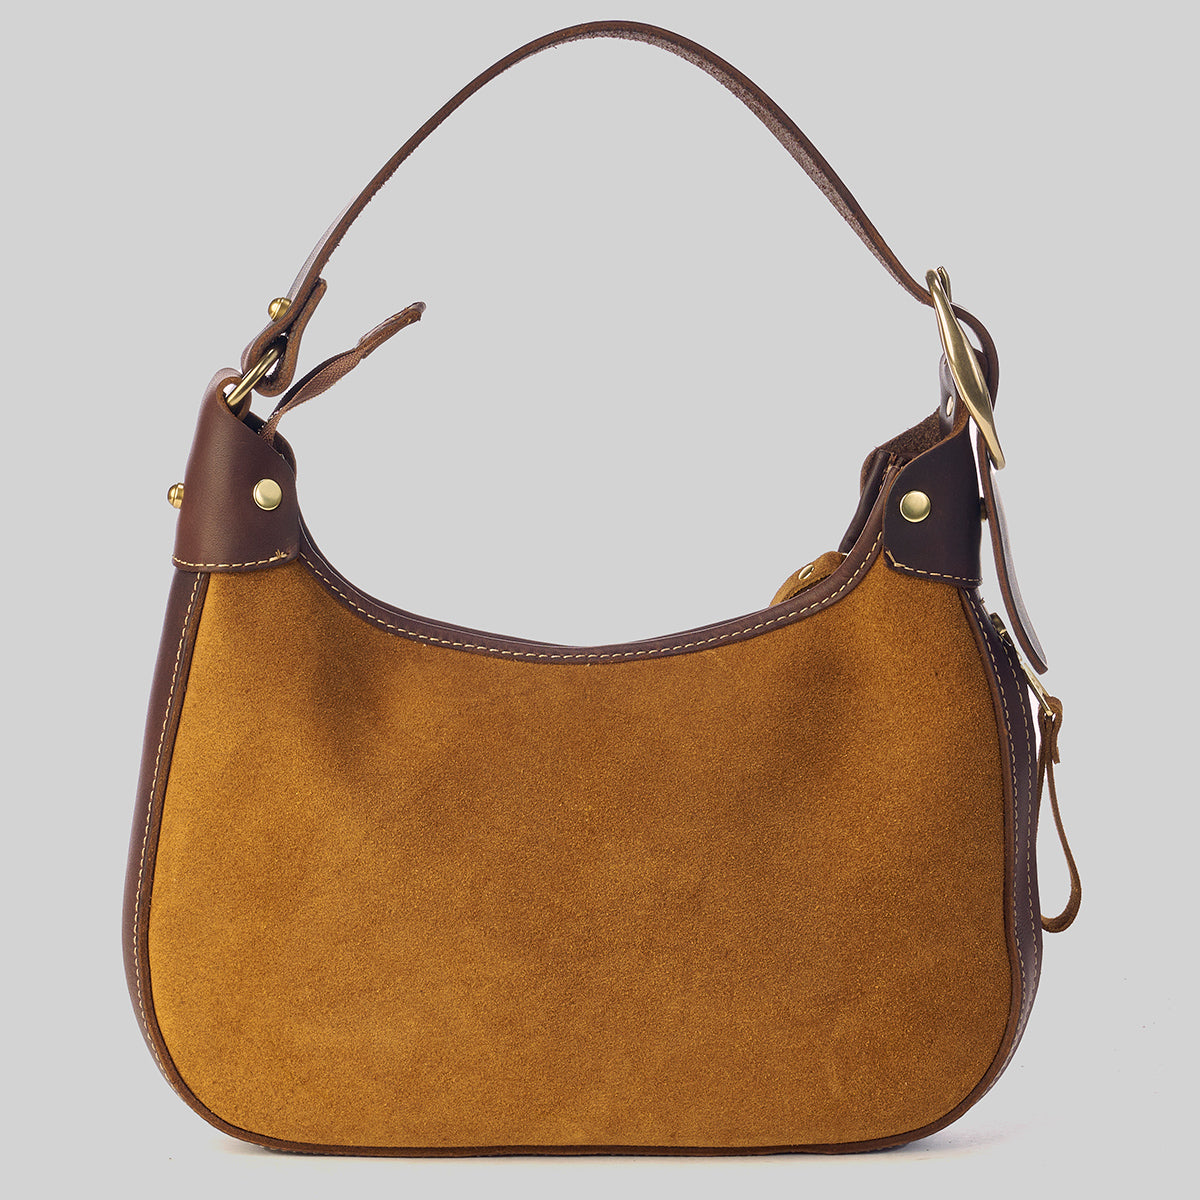 Cordova Leather & Suede Crossbody Bag - Vintage Two-Tone